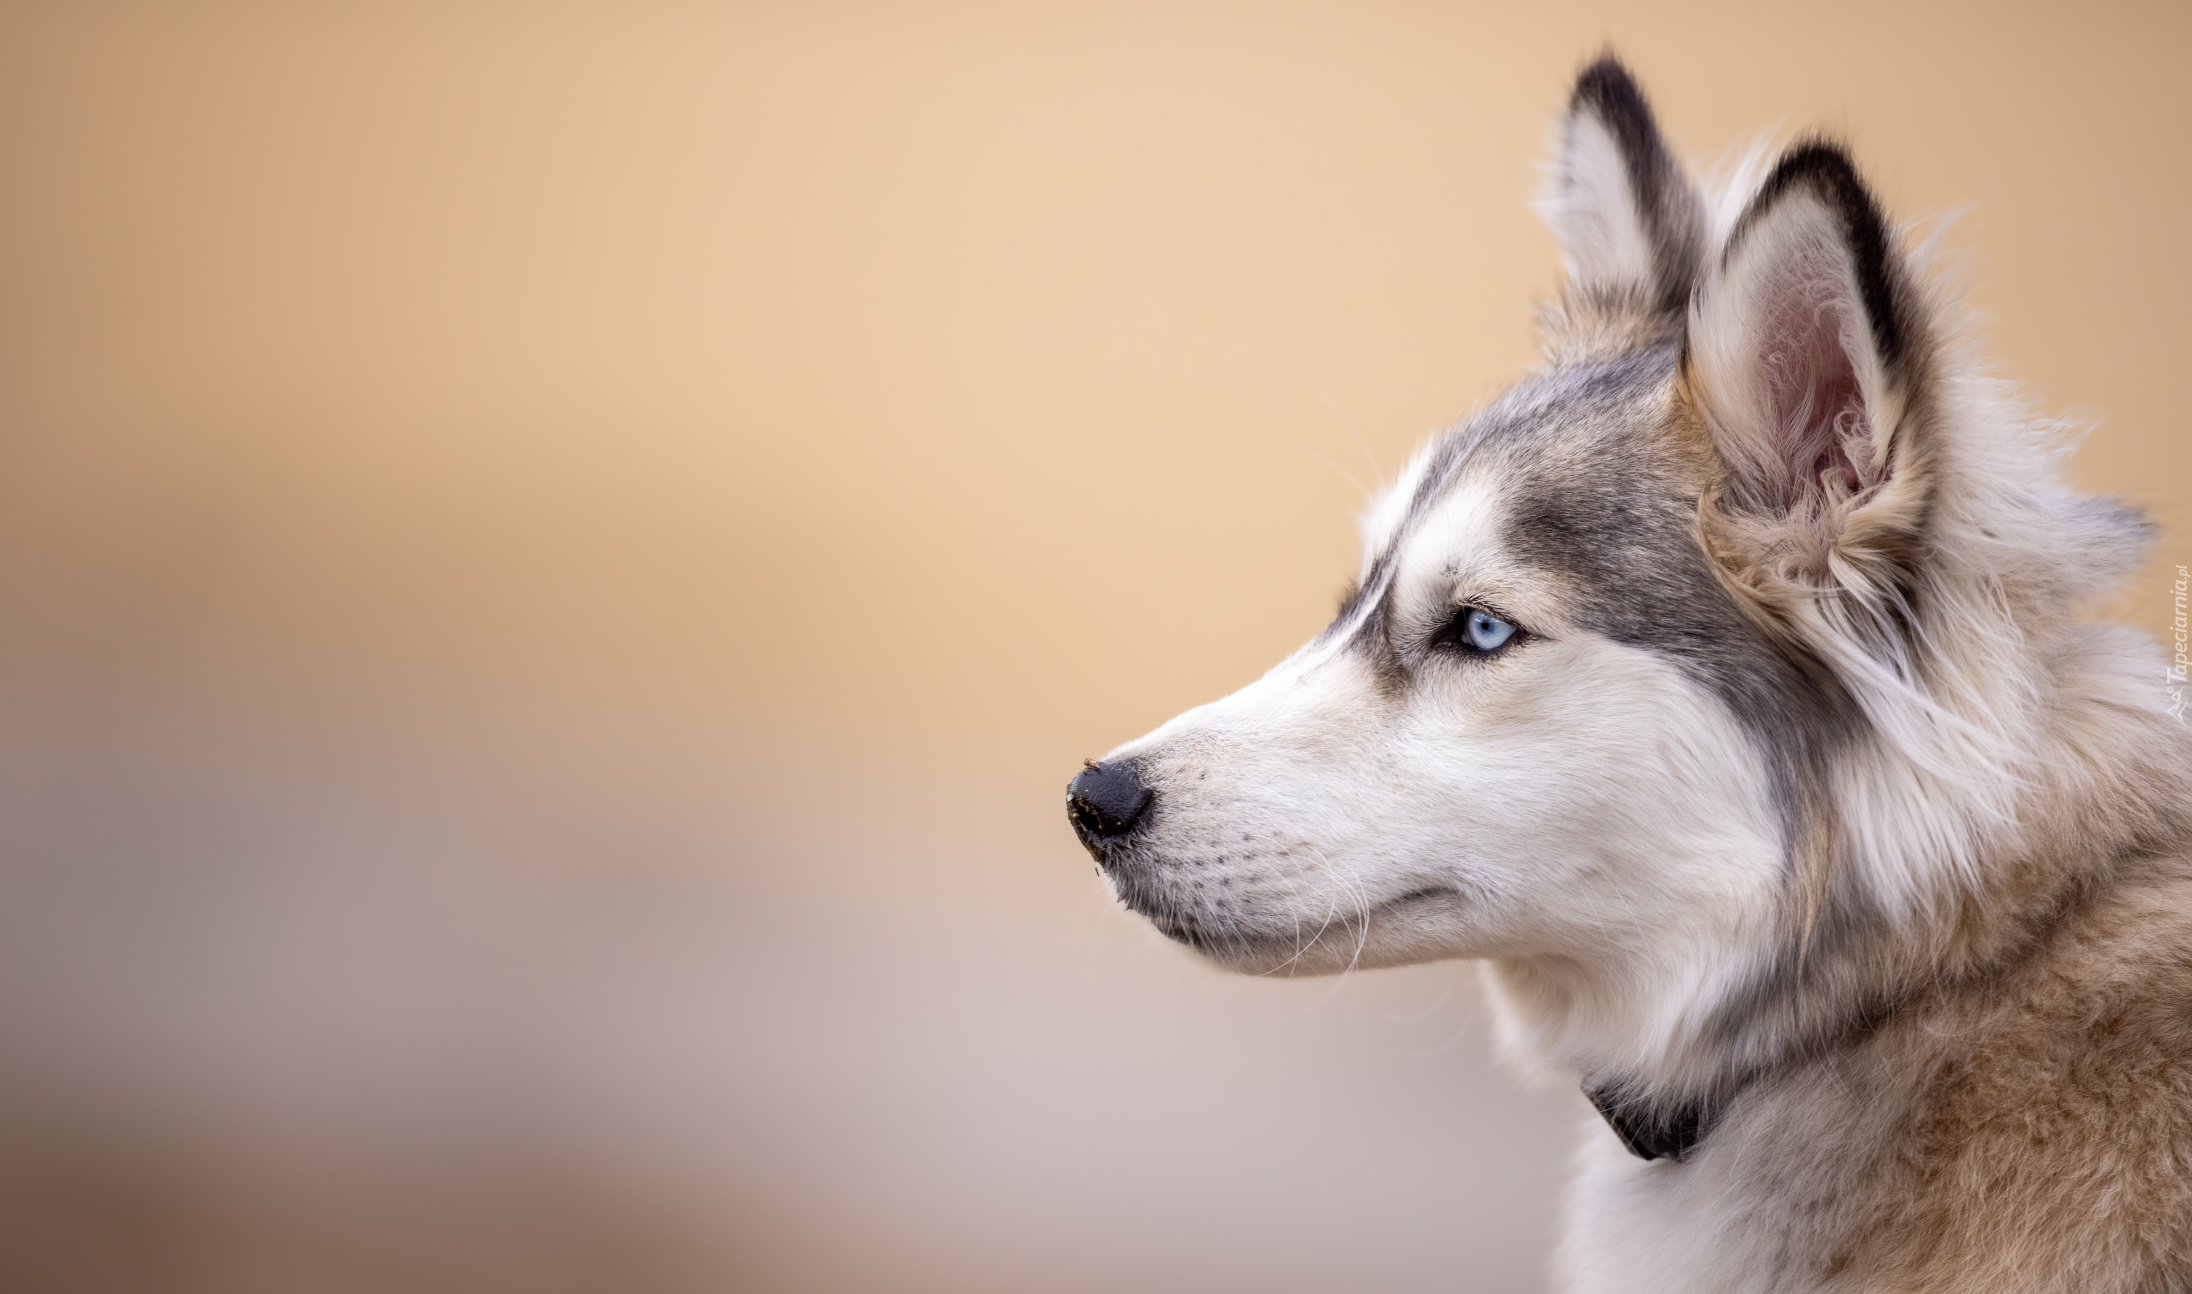 Pies, Siberian husky, Głowa, Profil